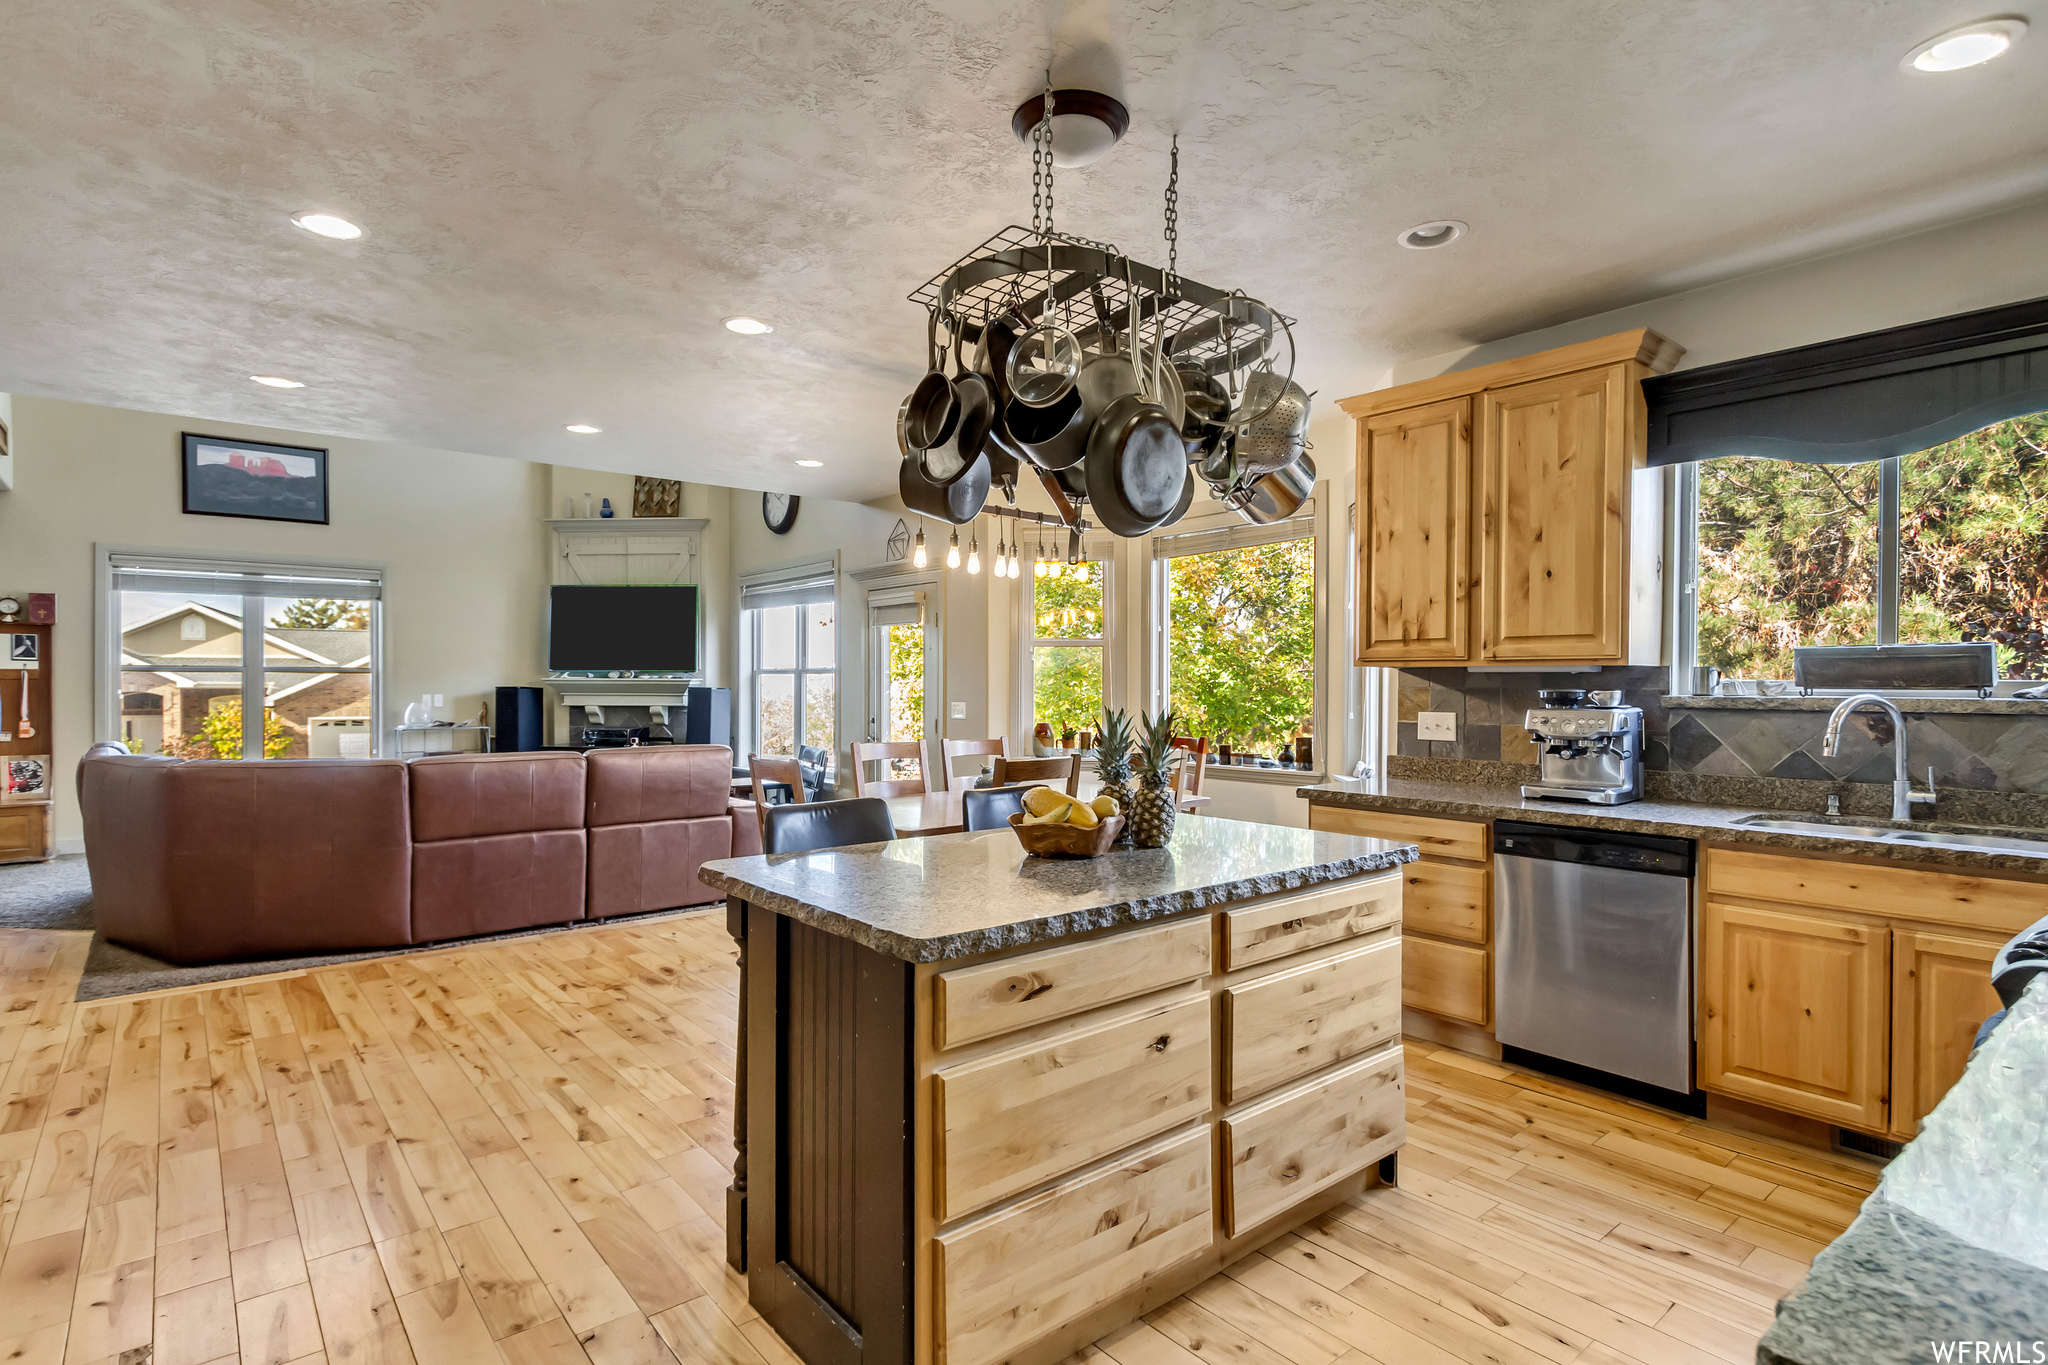 Kitchen with tasteful backsplash, light hardwood / wood-style flooring, sink, stainless steel dishwasher, and a notable chandelier